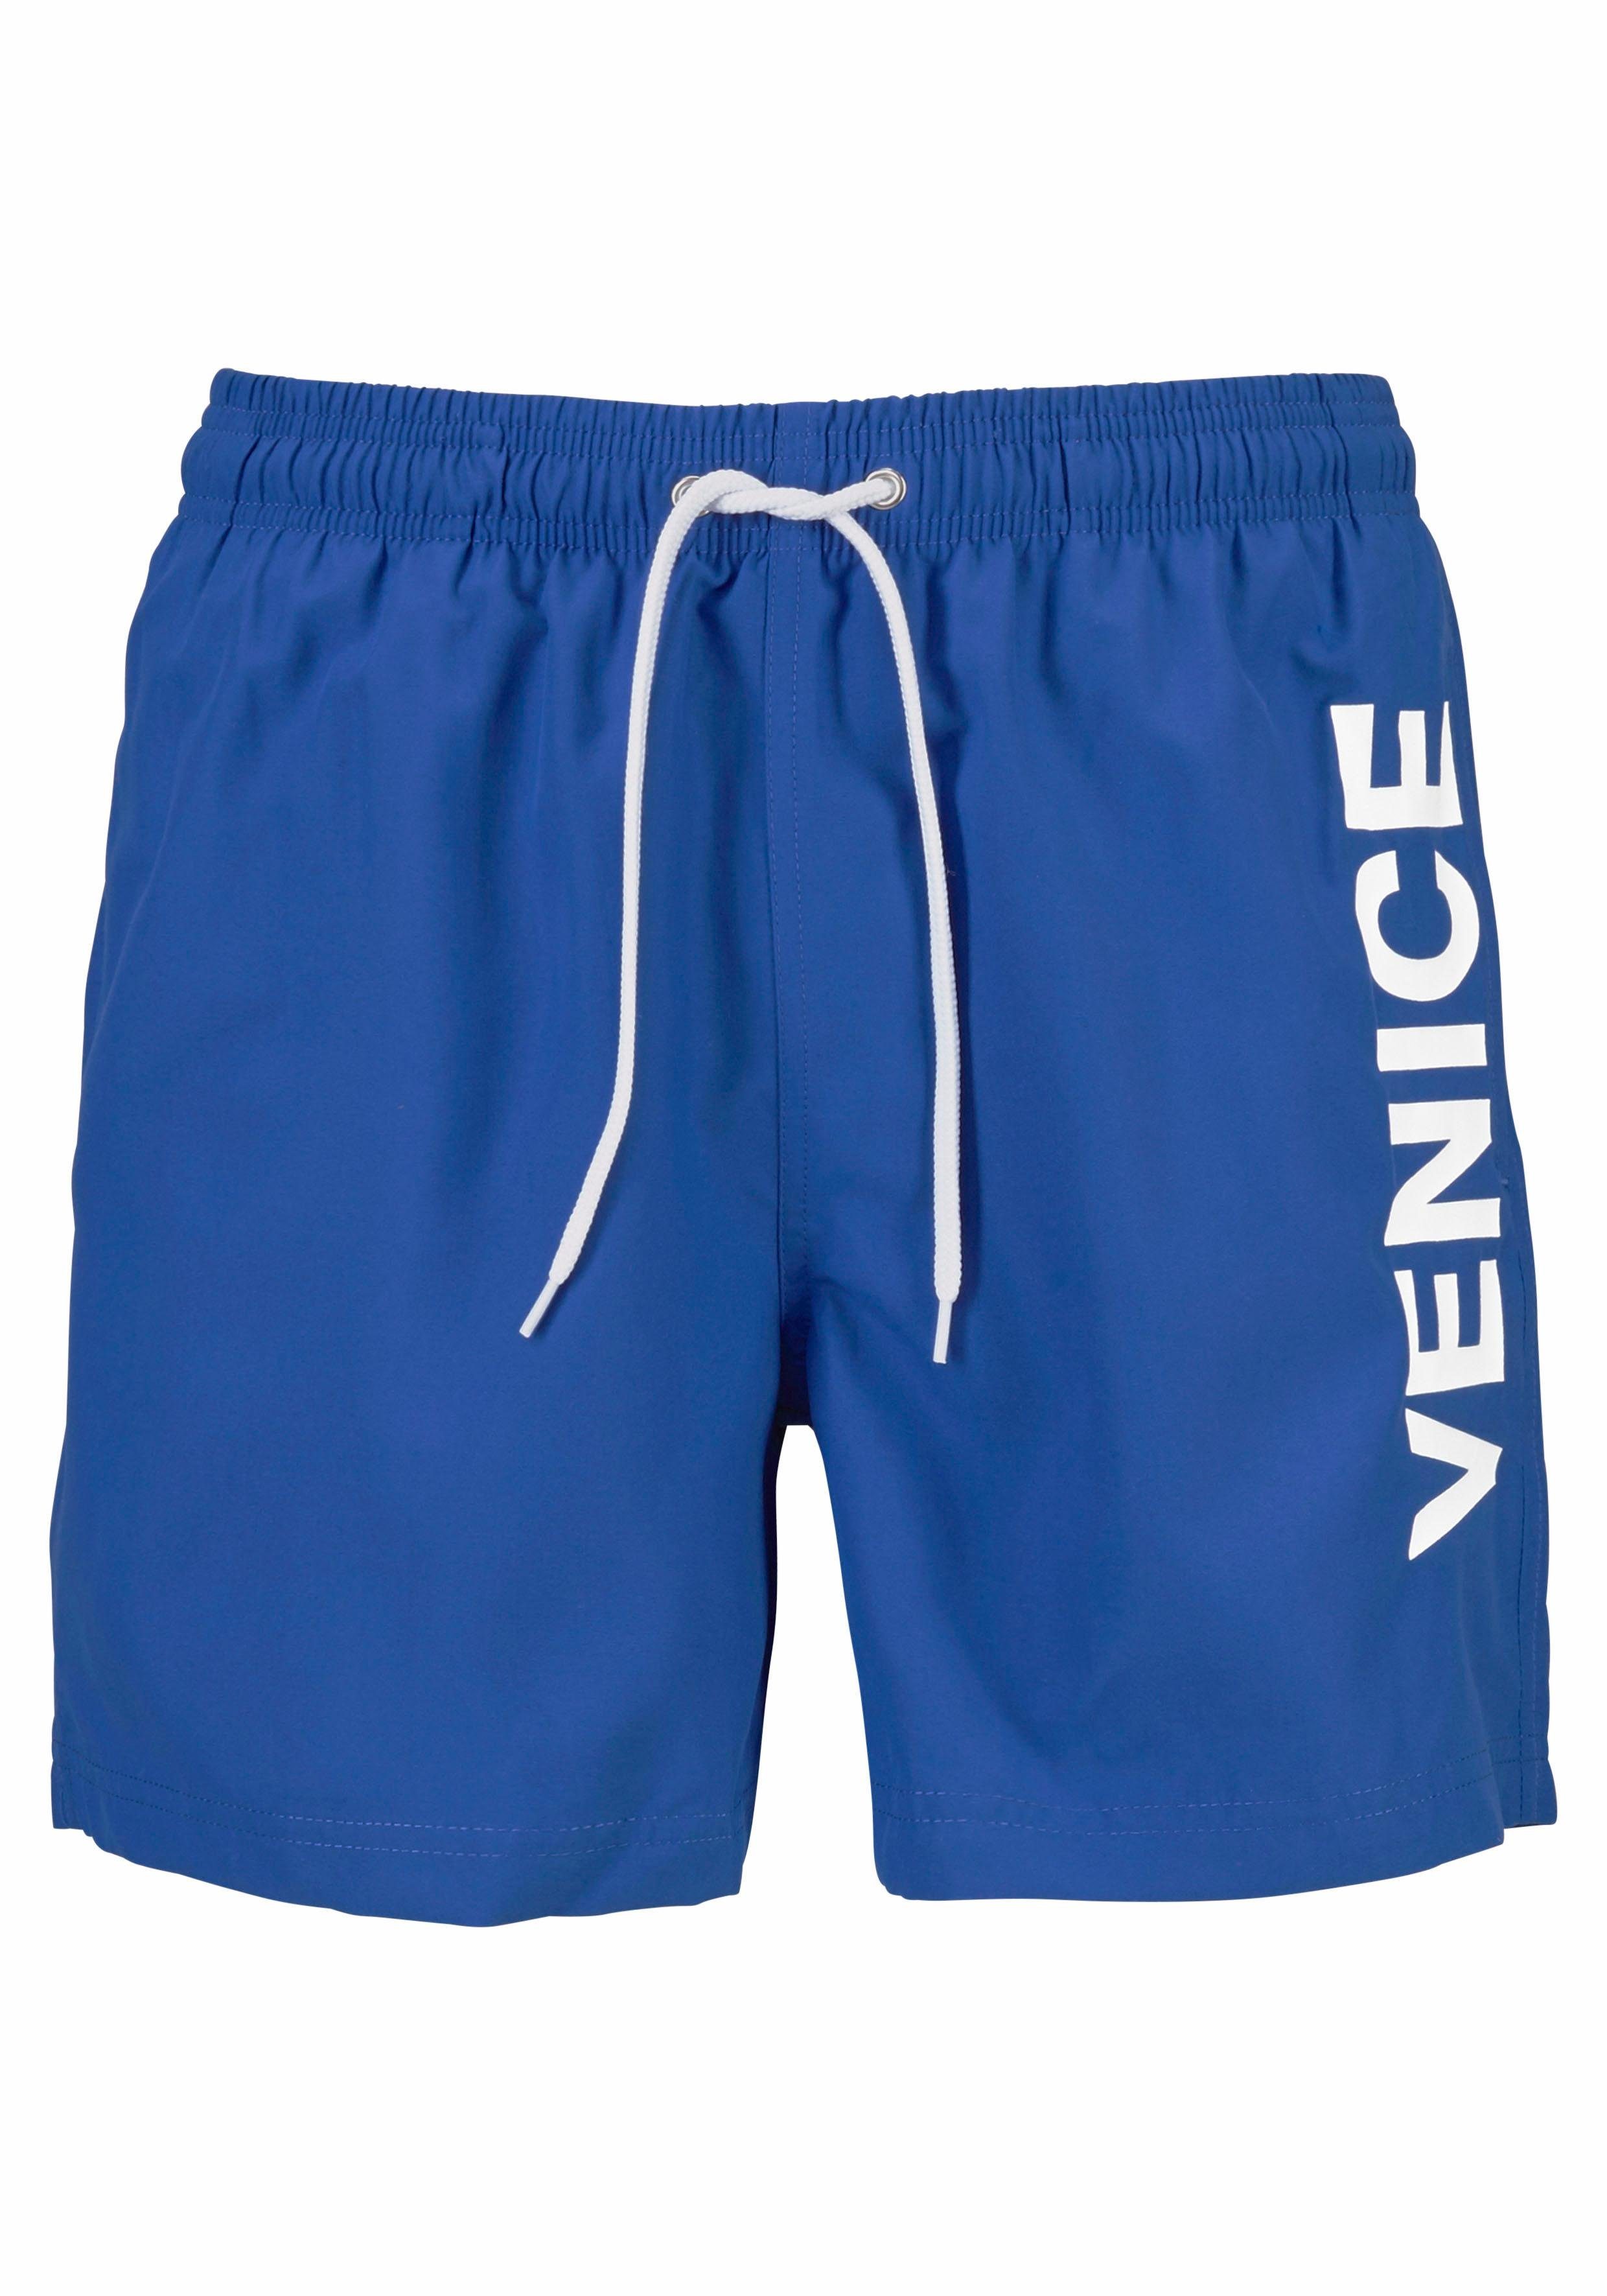 Badeshorts Beach Logodruck blau mit Venice